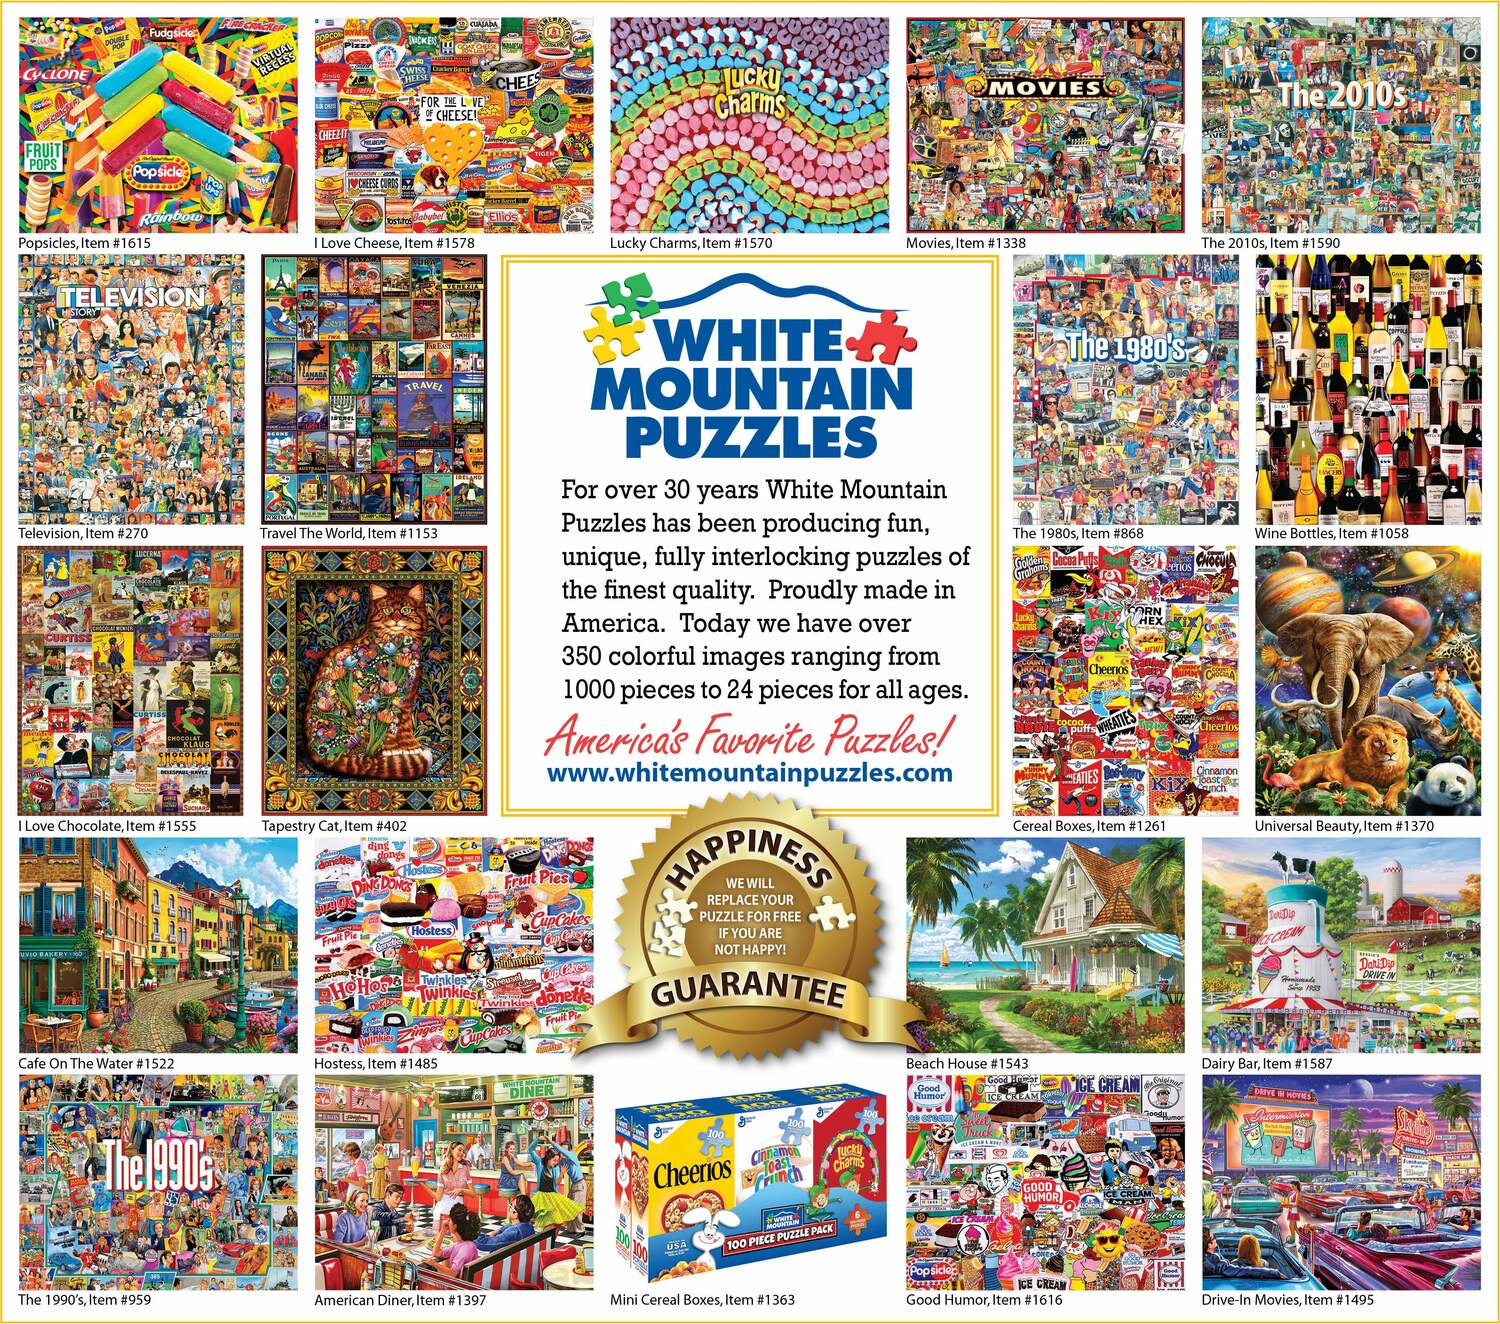 Beach Umbrellas - 500 Piece Jigsaw Puzzle